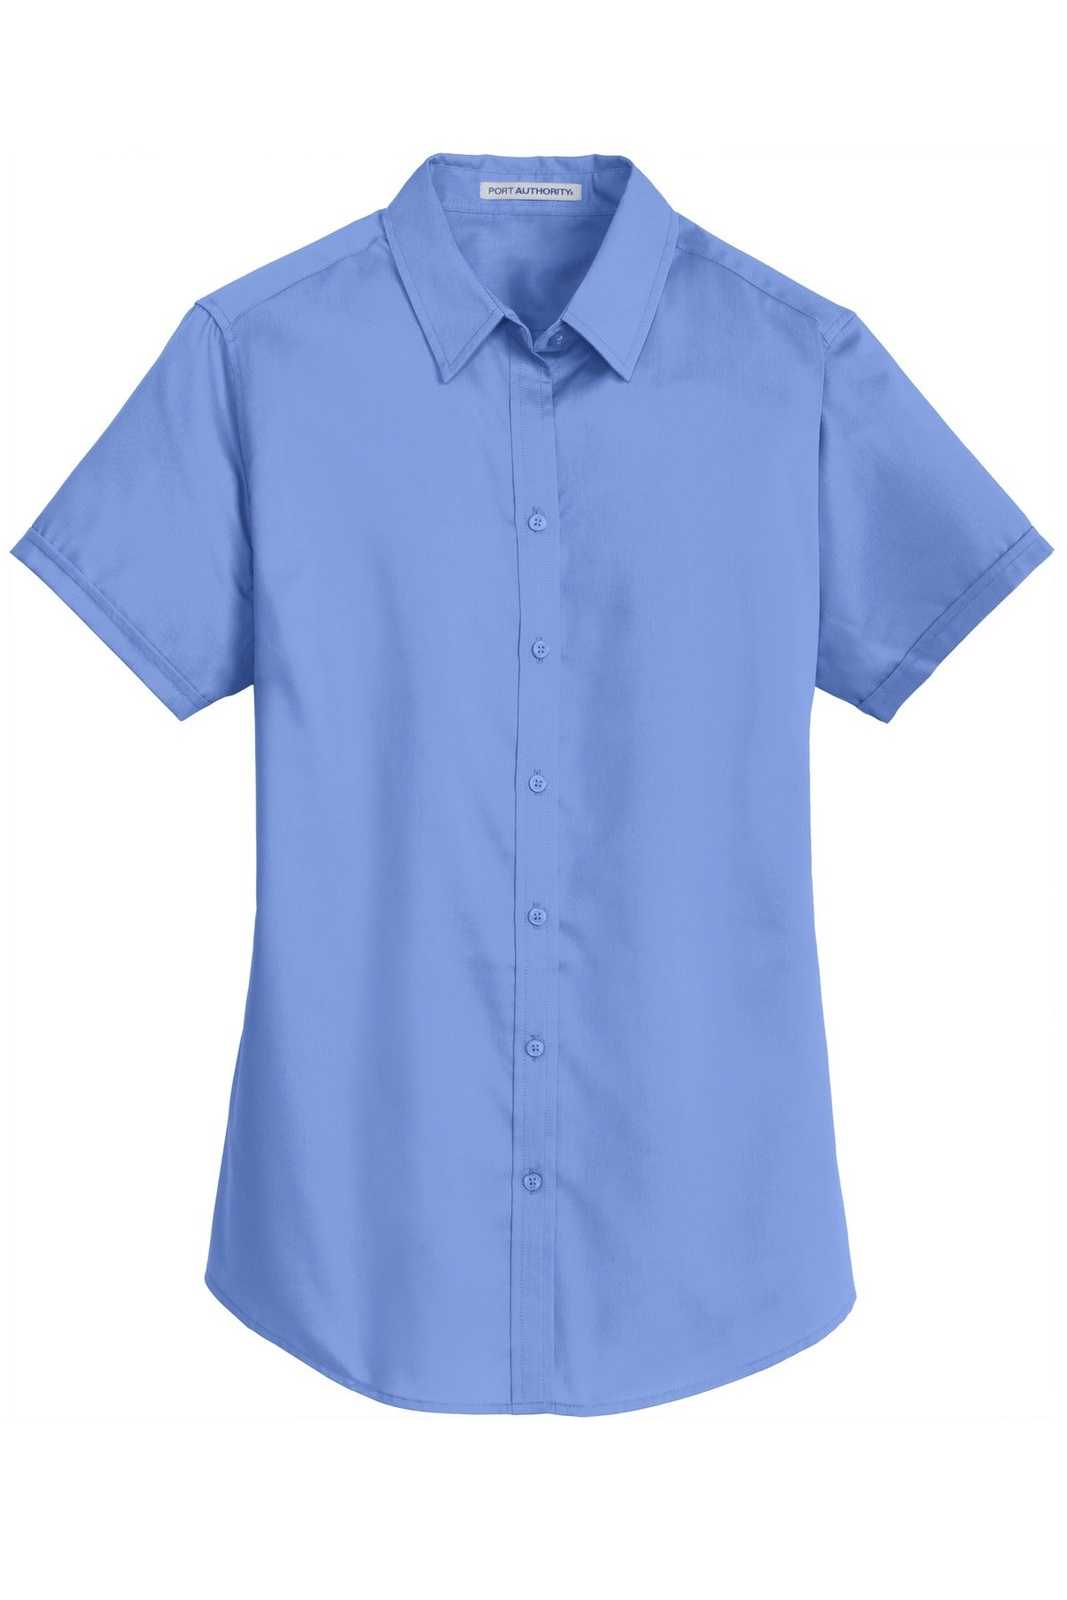 Port Authority L664 Ladies Short Sleeve Superpro Twill Shirt - Ultramarine Blue - HIT a Double - 5